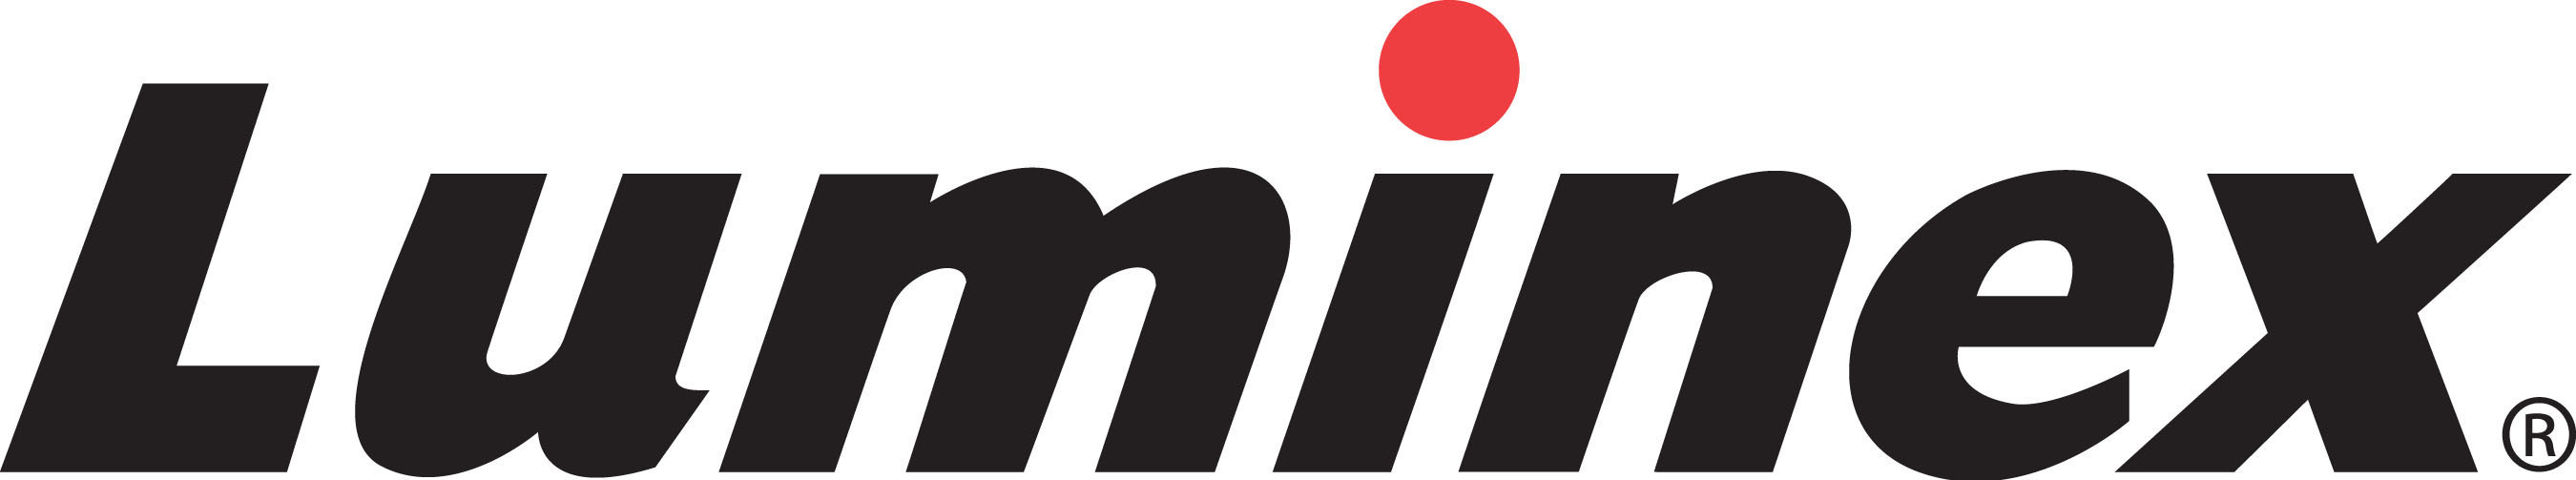 Luminex logo. (PRNewsFoto/LUMINEX CORP.) (PRNewsFoto/)